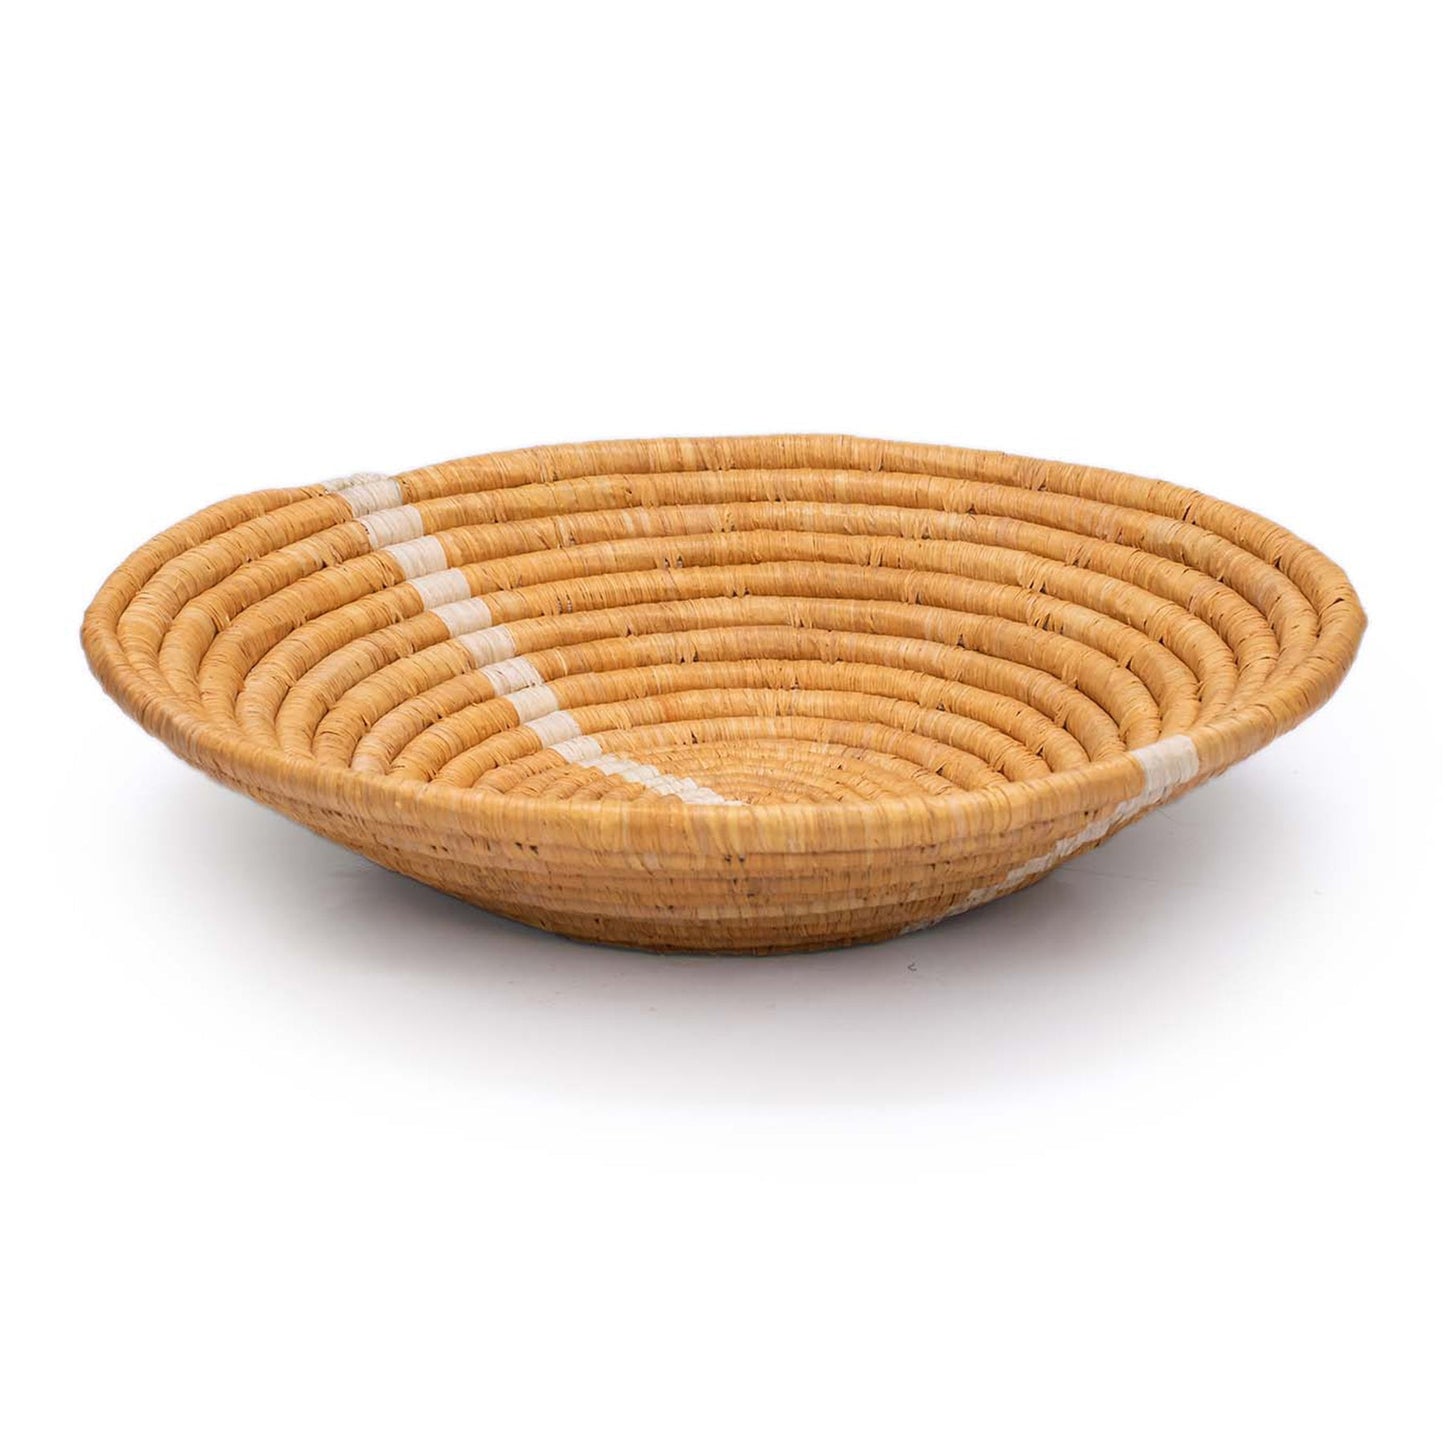 12" Neutral Woven Bowl - Striped Tan | Home Decor